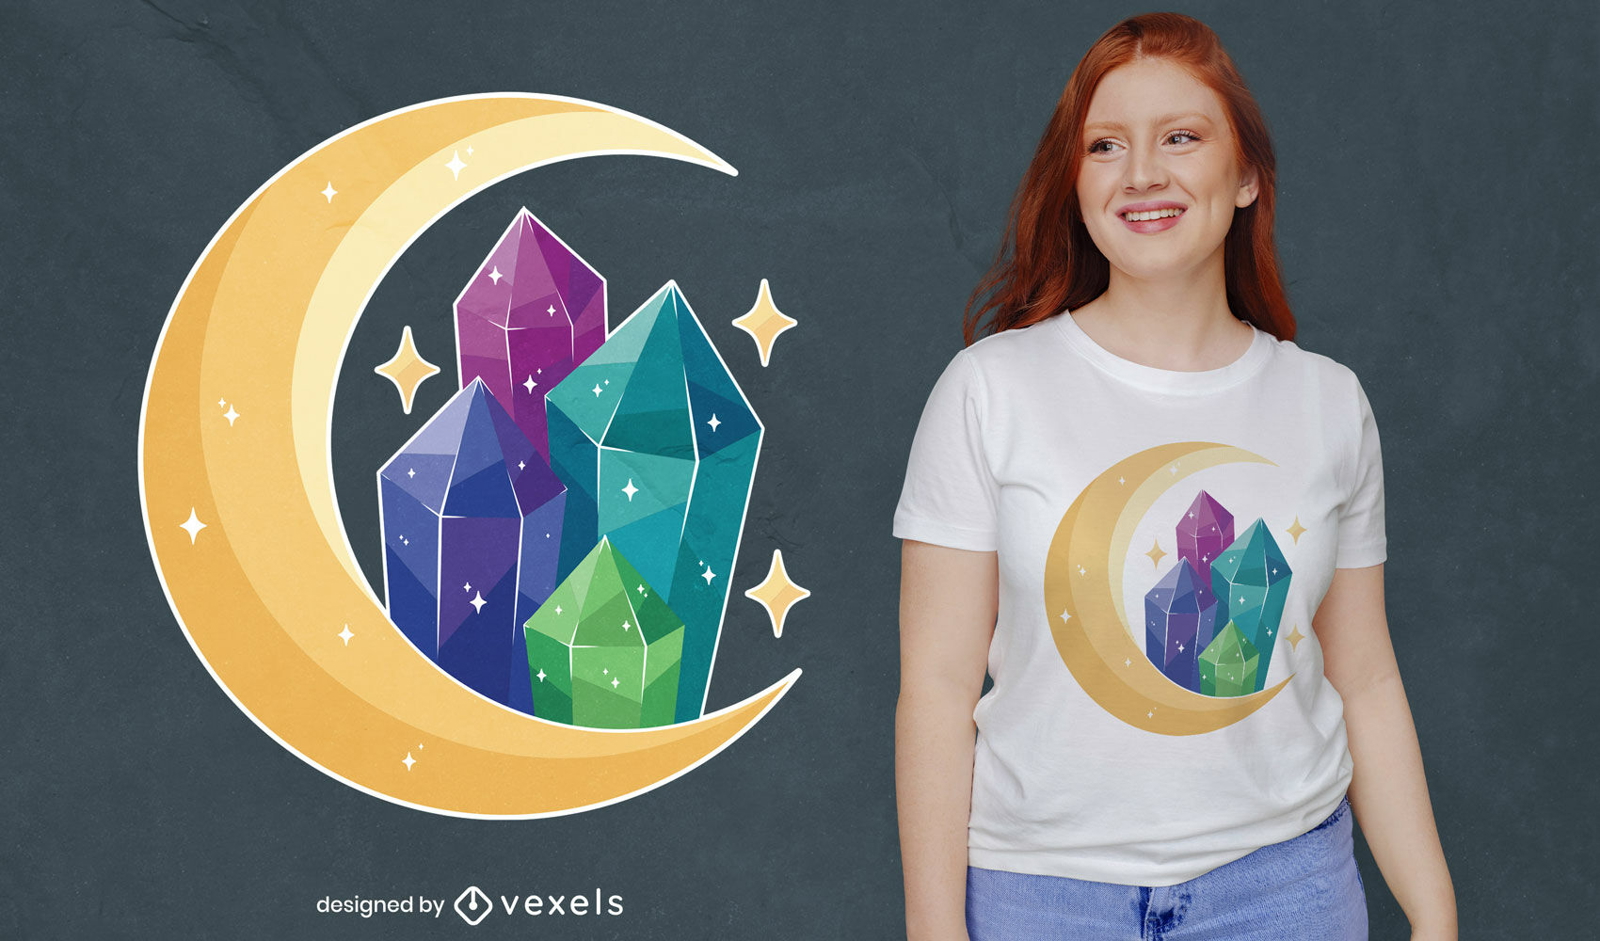 Moon and crystals magical t-shirt design